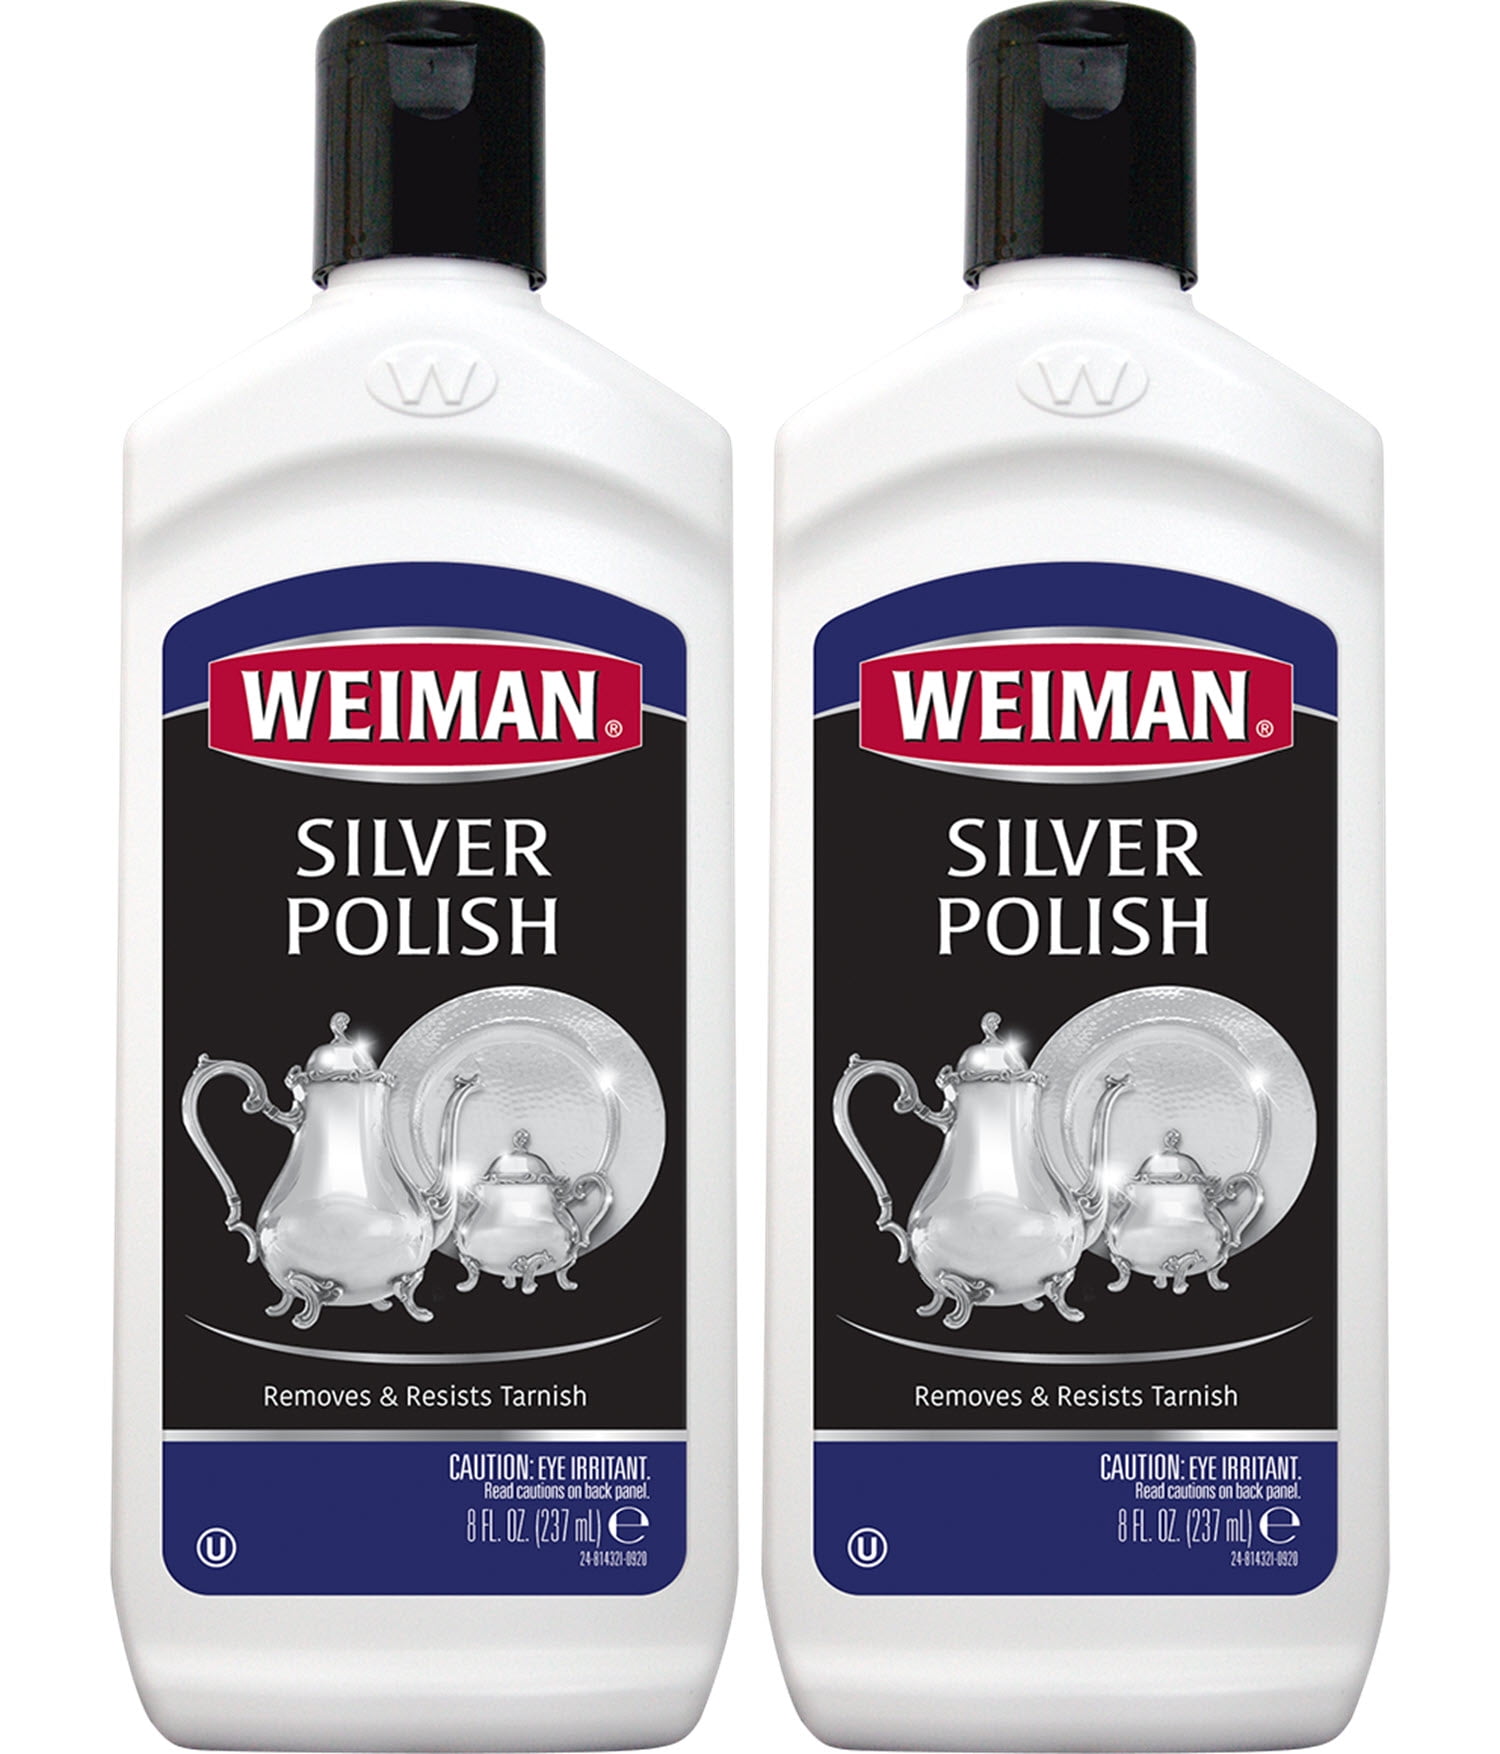 .com: Goddard's Silver Polish Liquid, Tarnish Remover, 7 oz, Pack of  2 : Health & Household